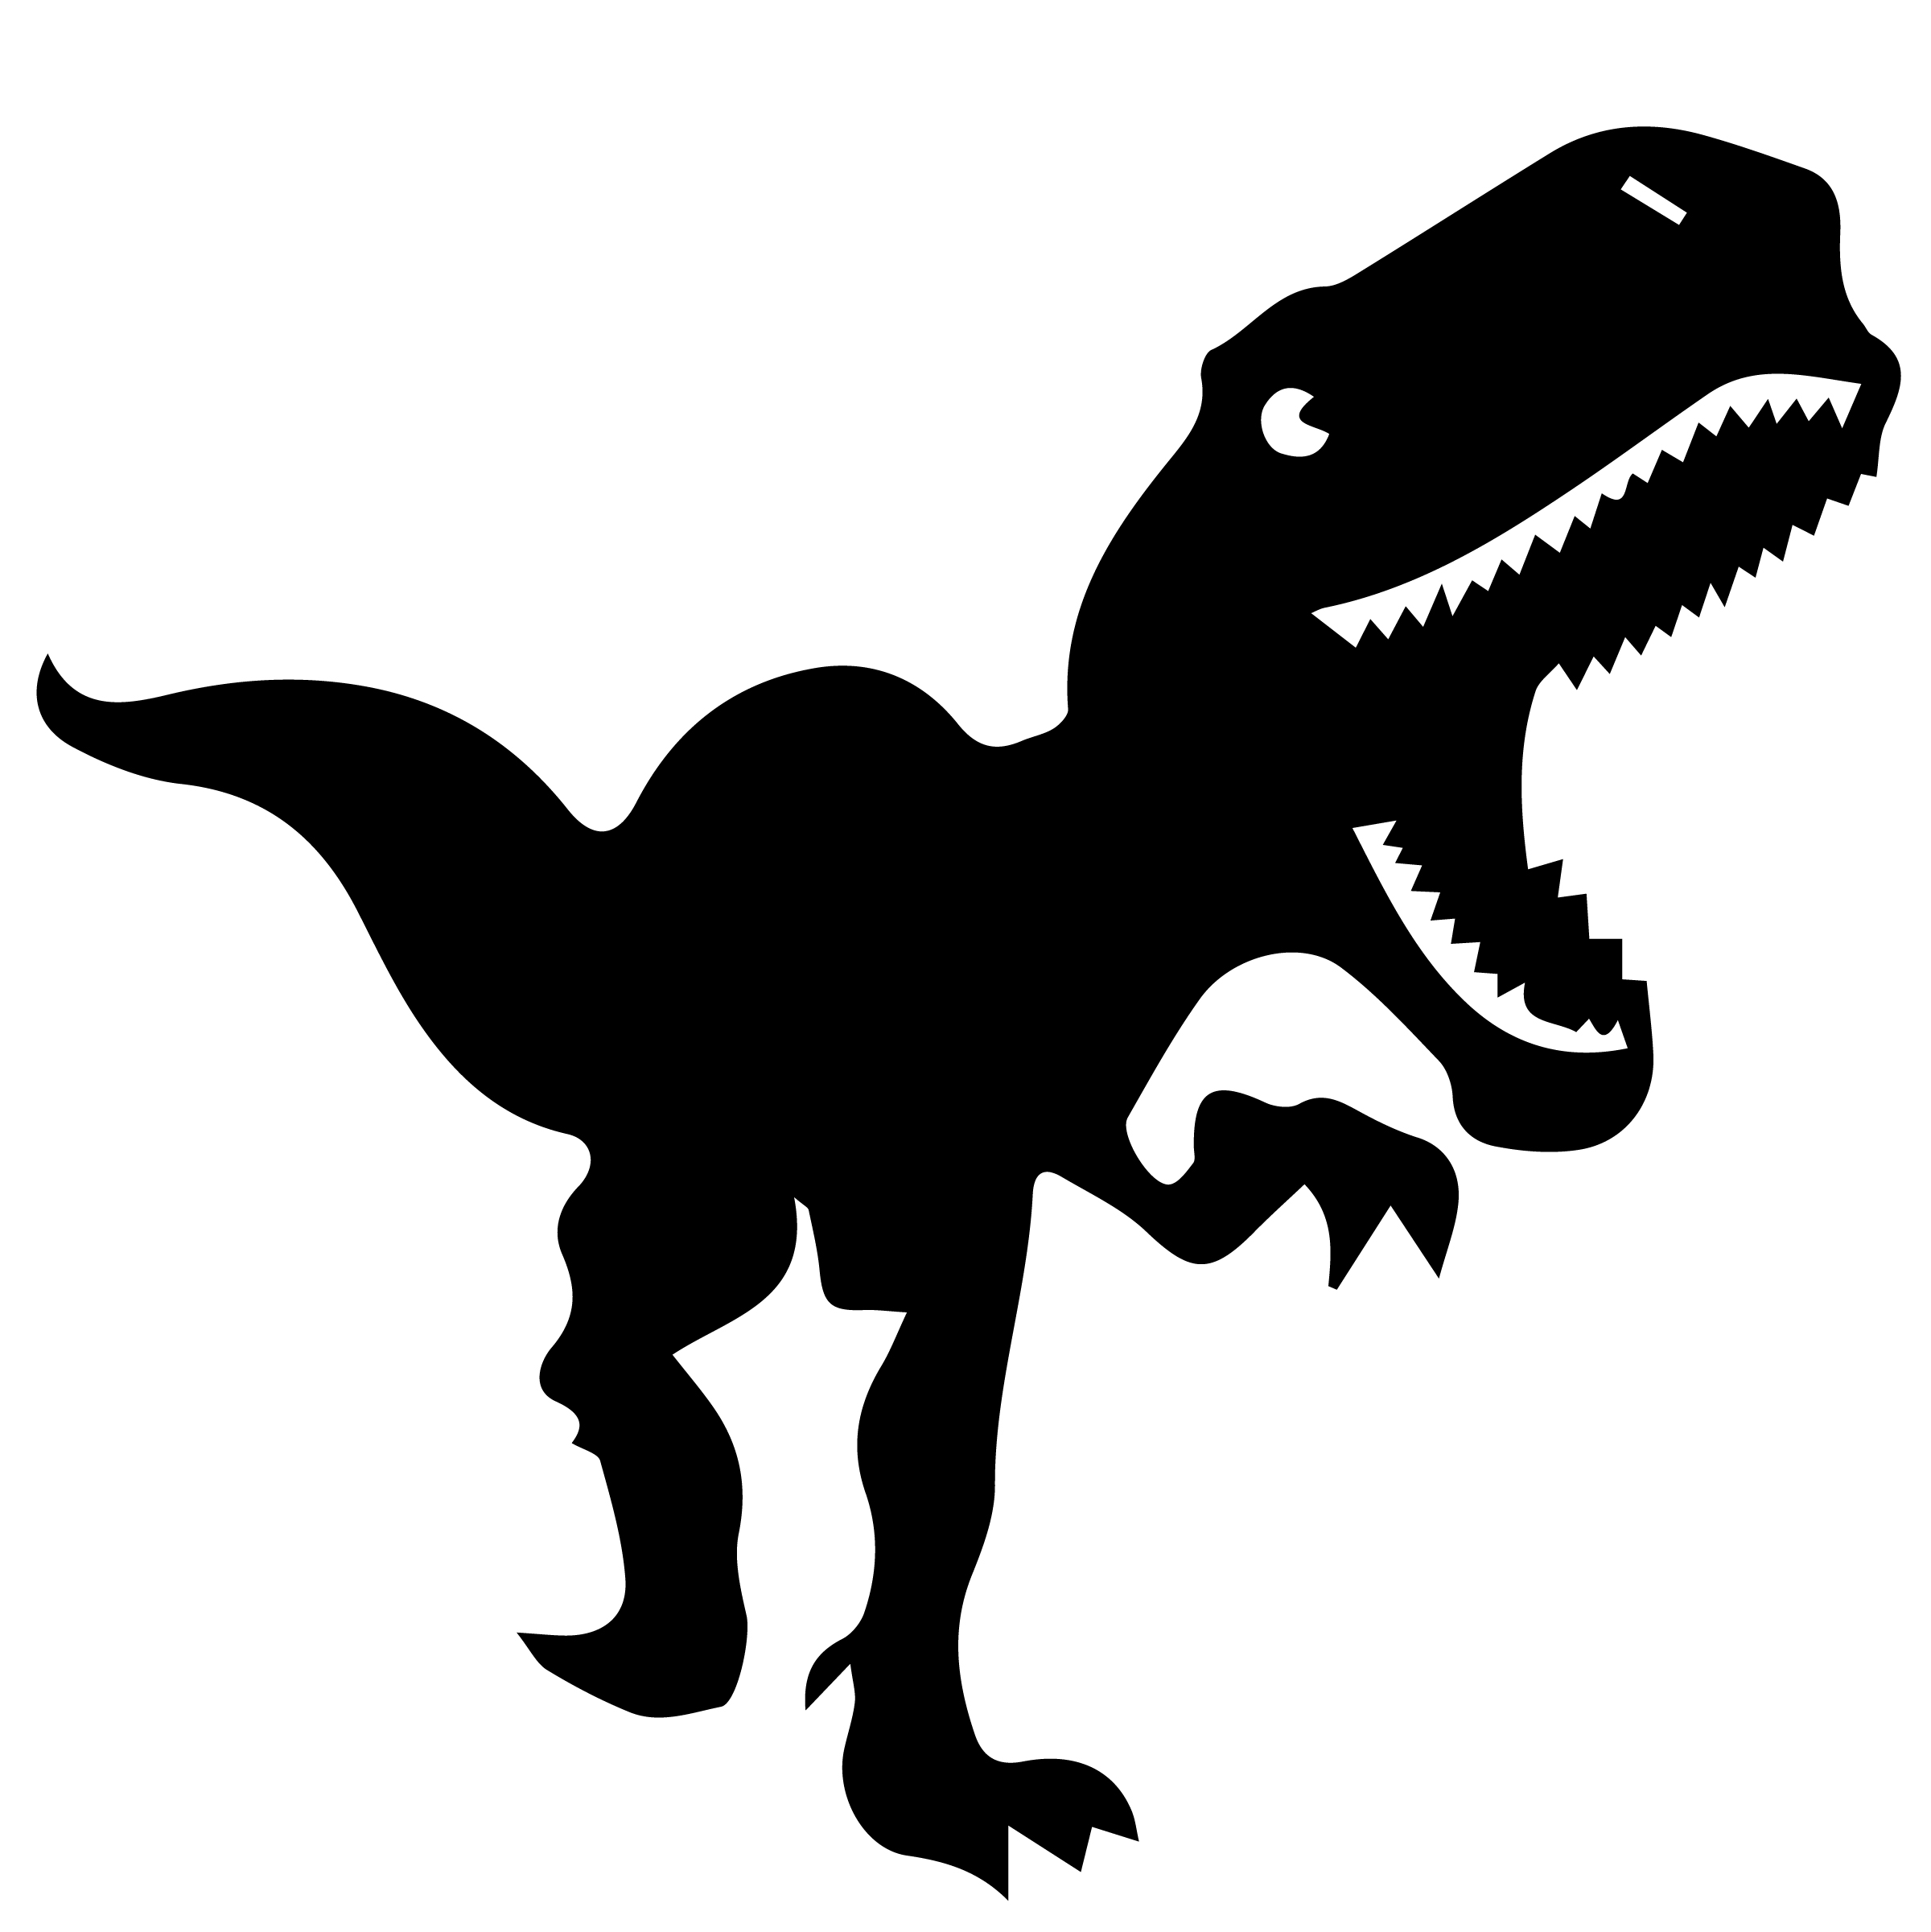 Download t-rex vector eps - Download Free Vectors, Clipart Graphics & Vector Art